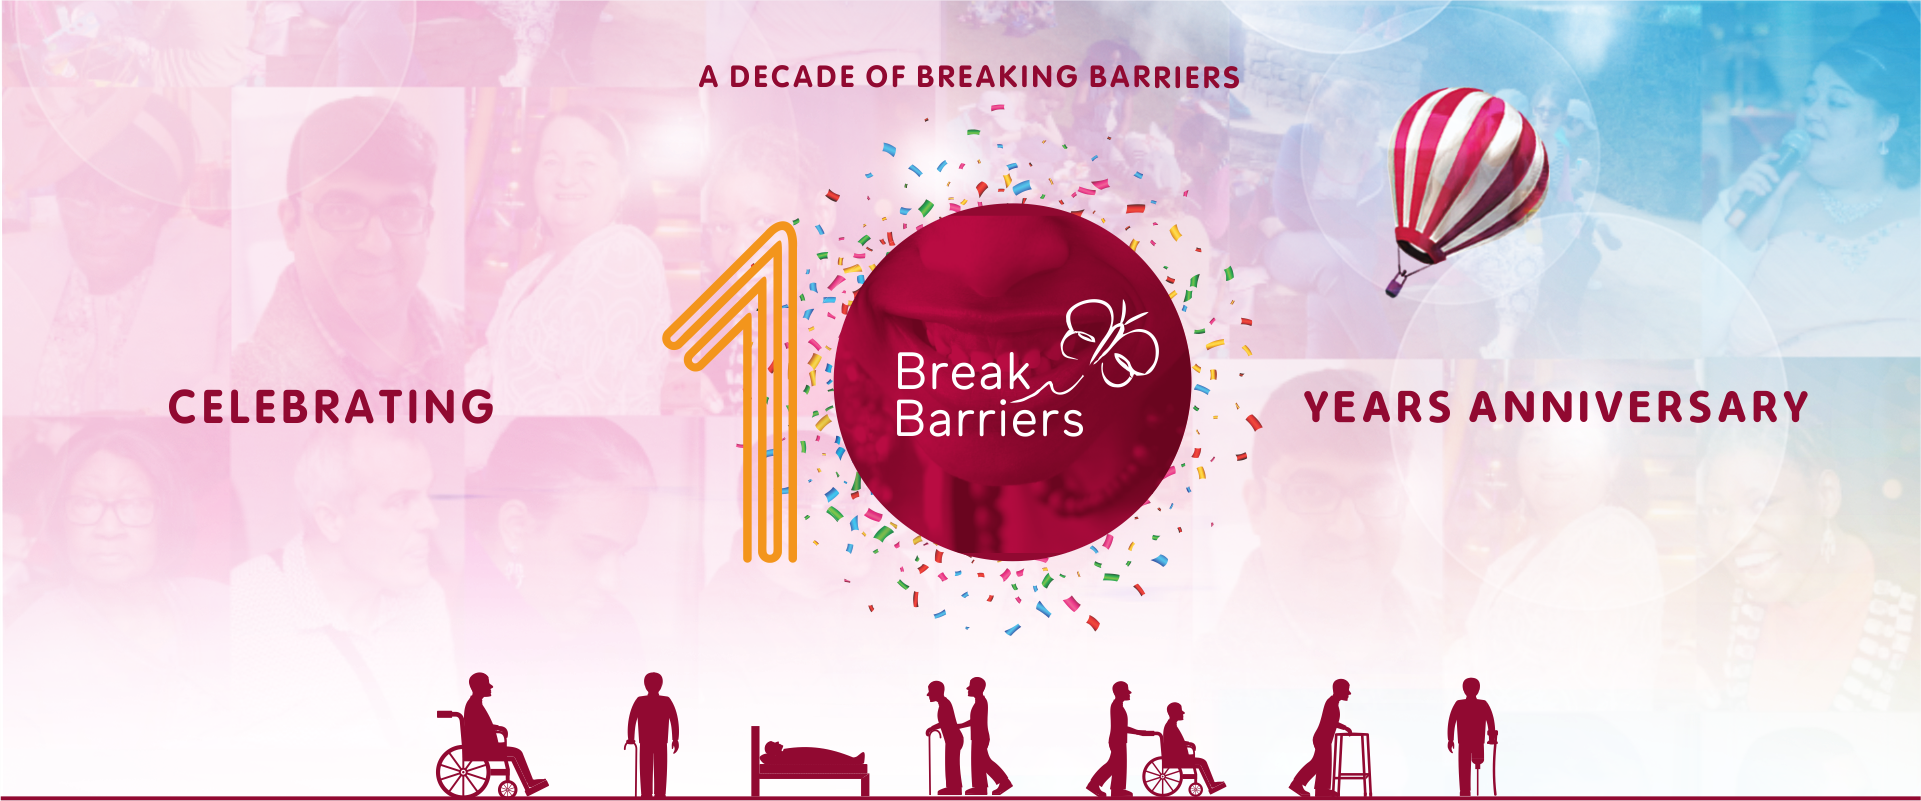 https://www.breakbarriers.co.uk/images/home/slider/Break%20Barriers%2010th%20anniversary.png